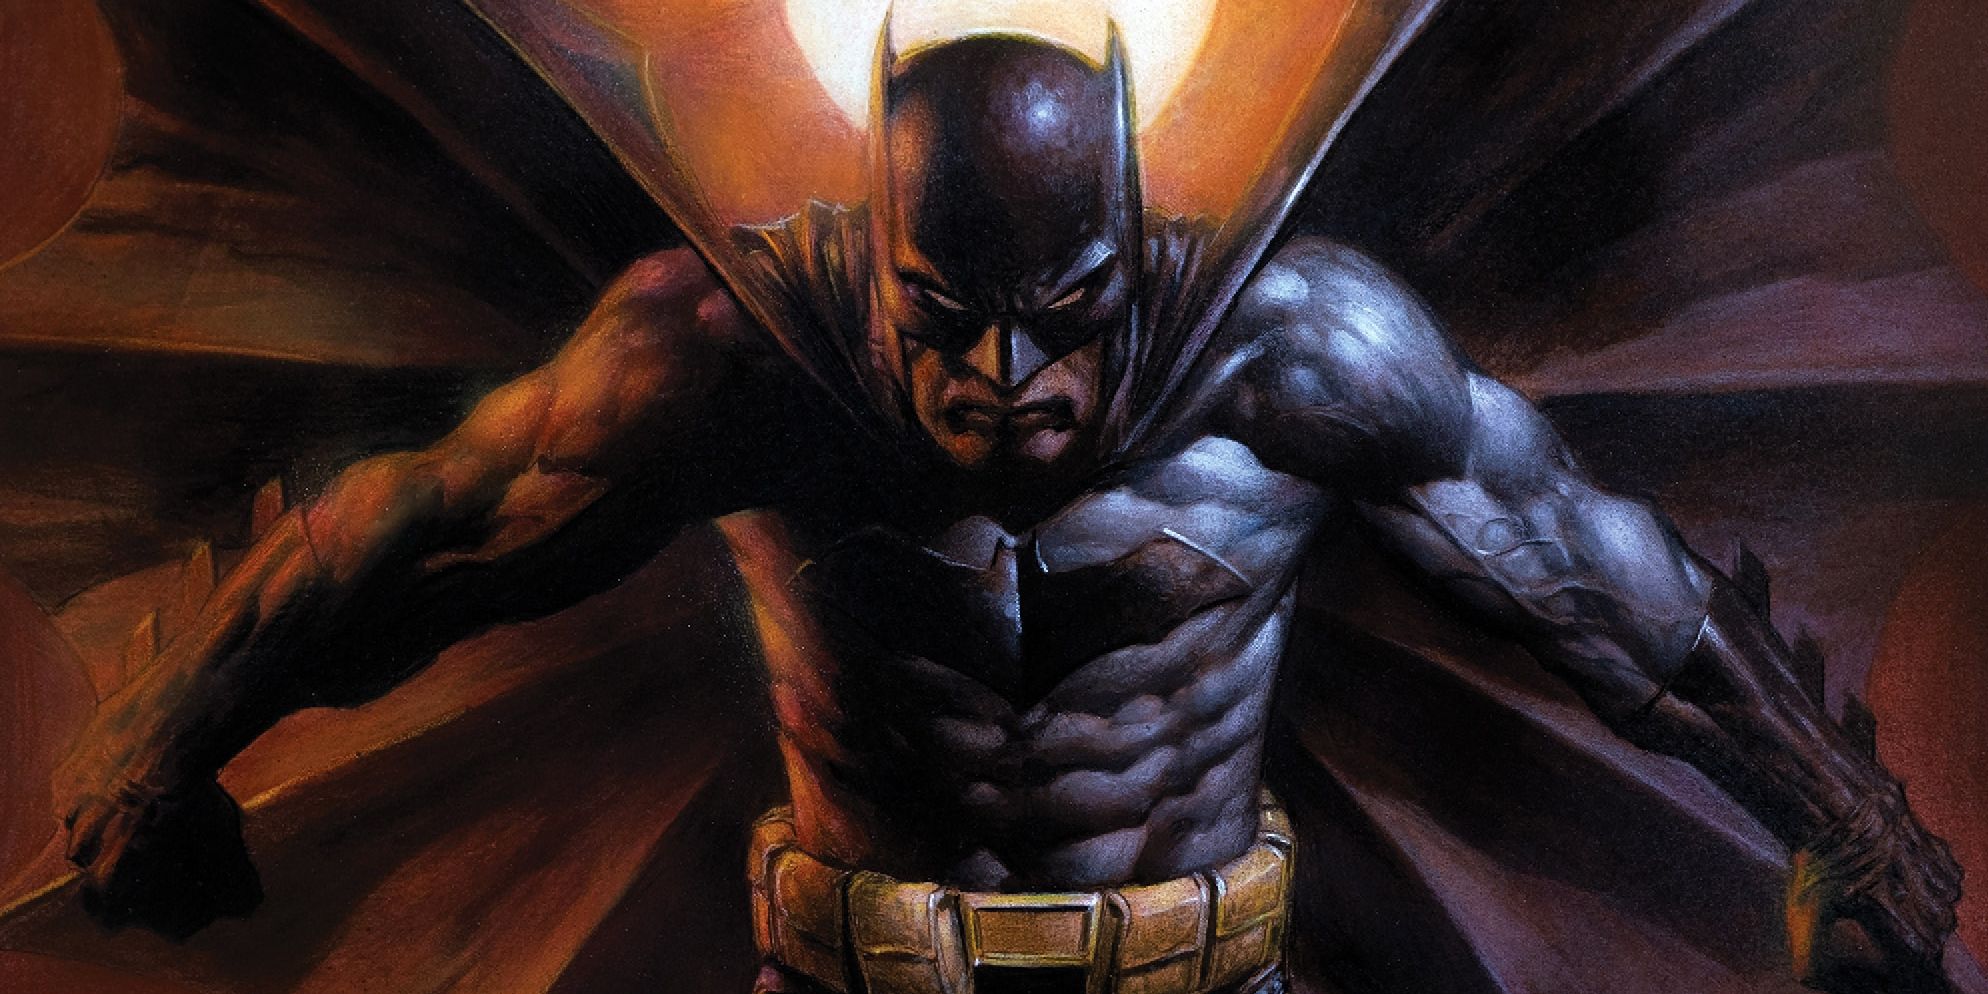 “Un virus narrativo”: DC le da oficialmente a Batman un superpoder, uno que transforma todo el multiverso